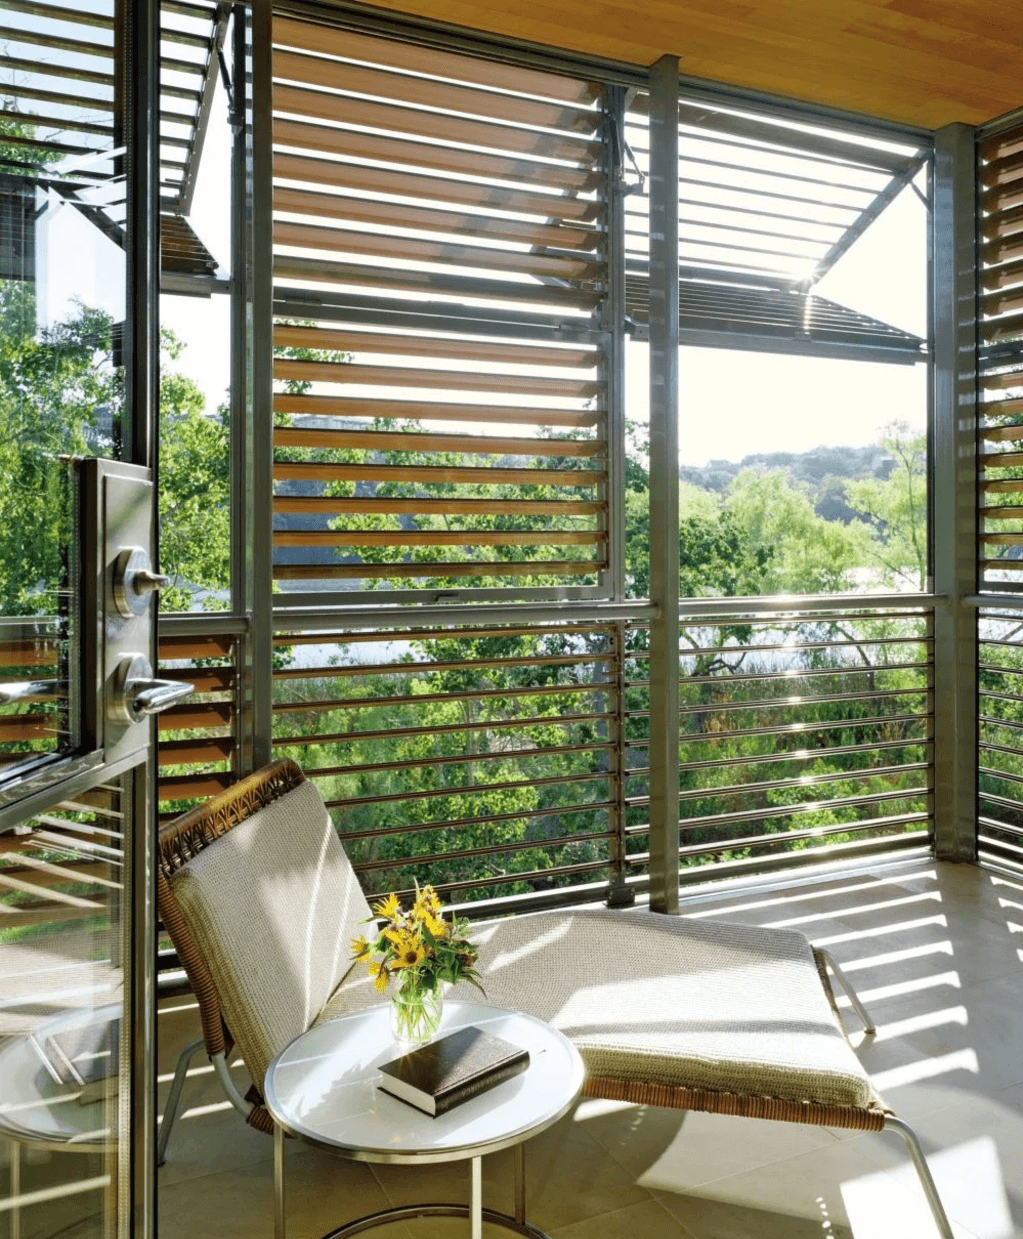  modern grill design for  balcony